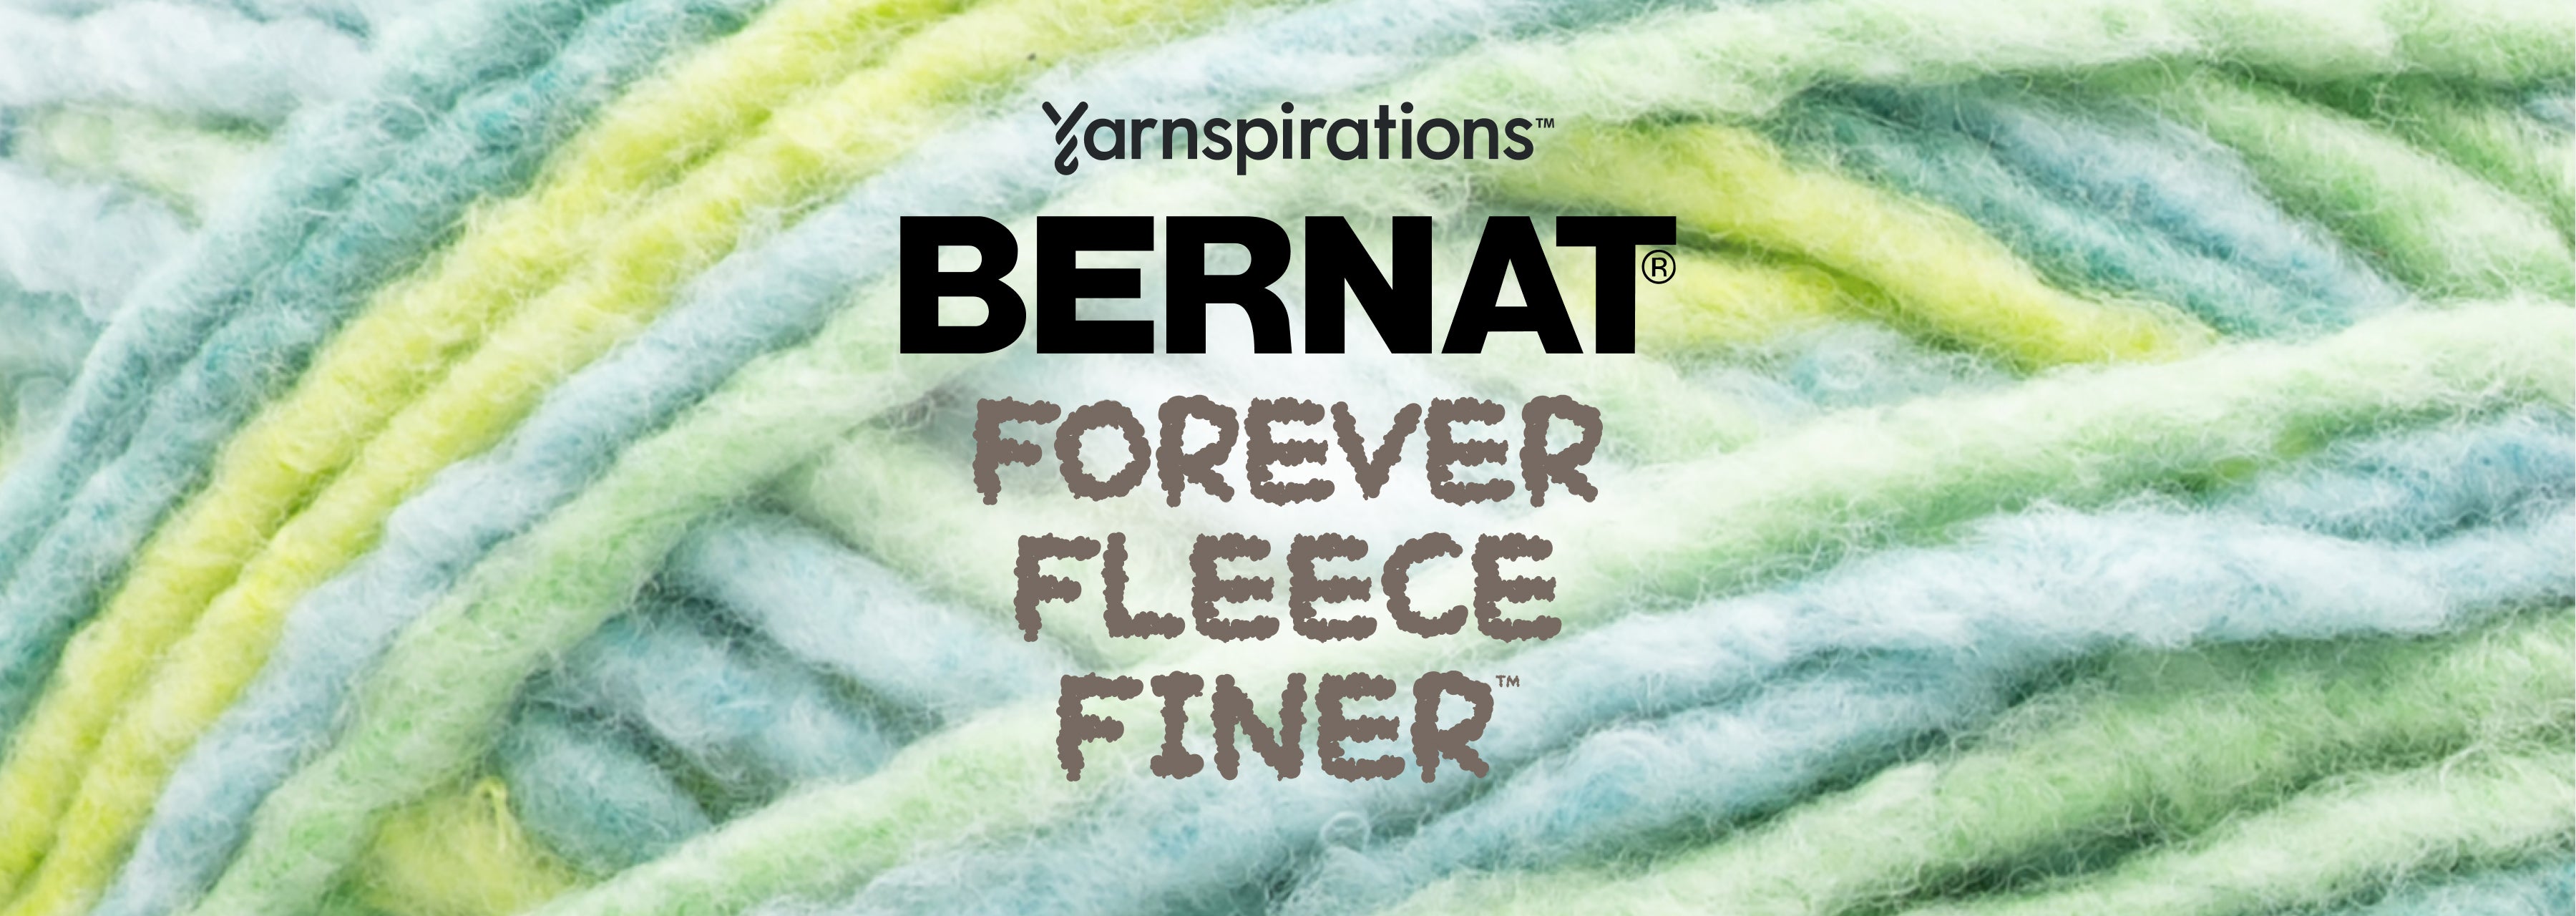 Introducing Bernat Forever Fleece Finer